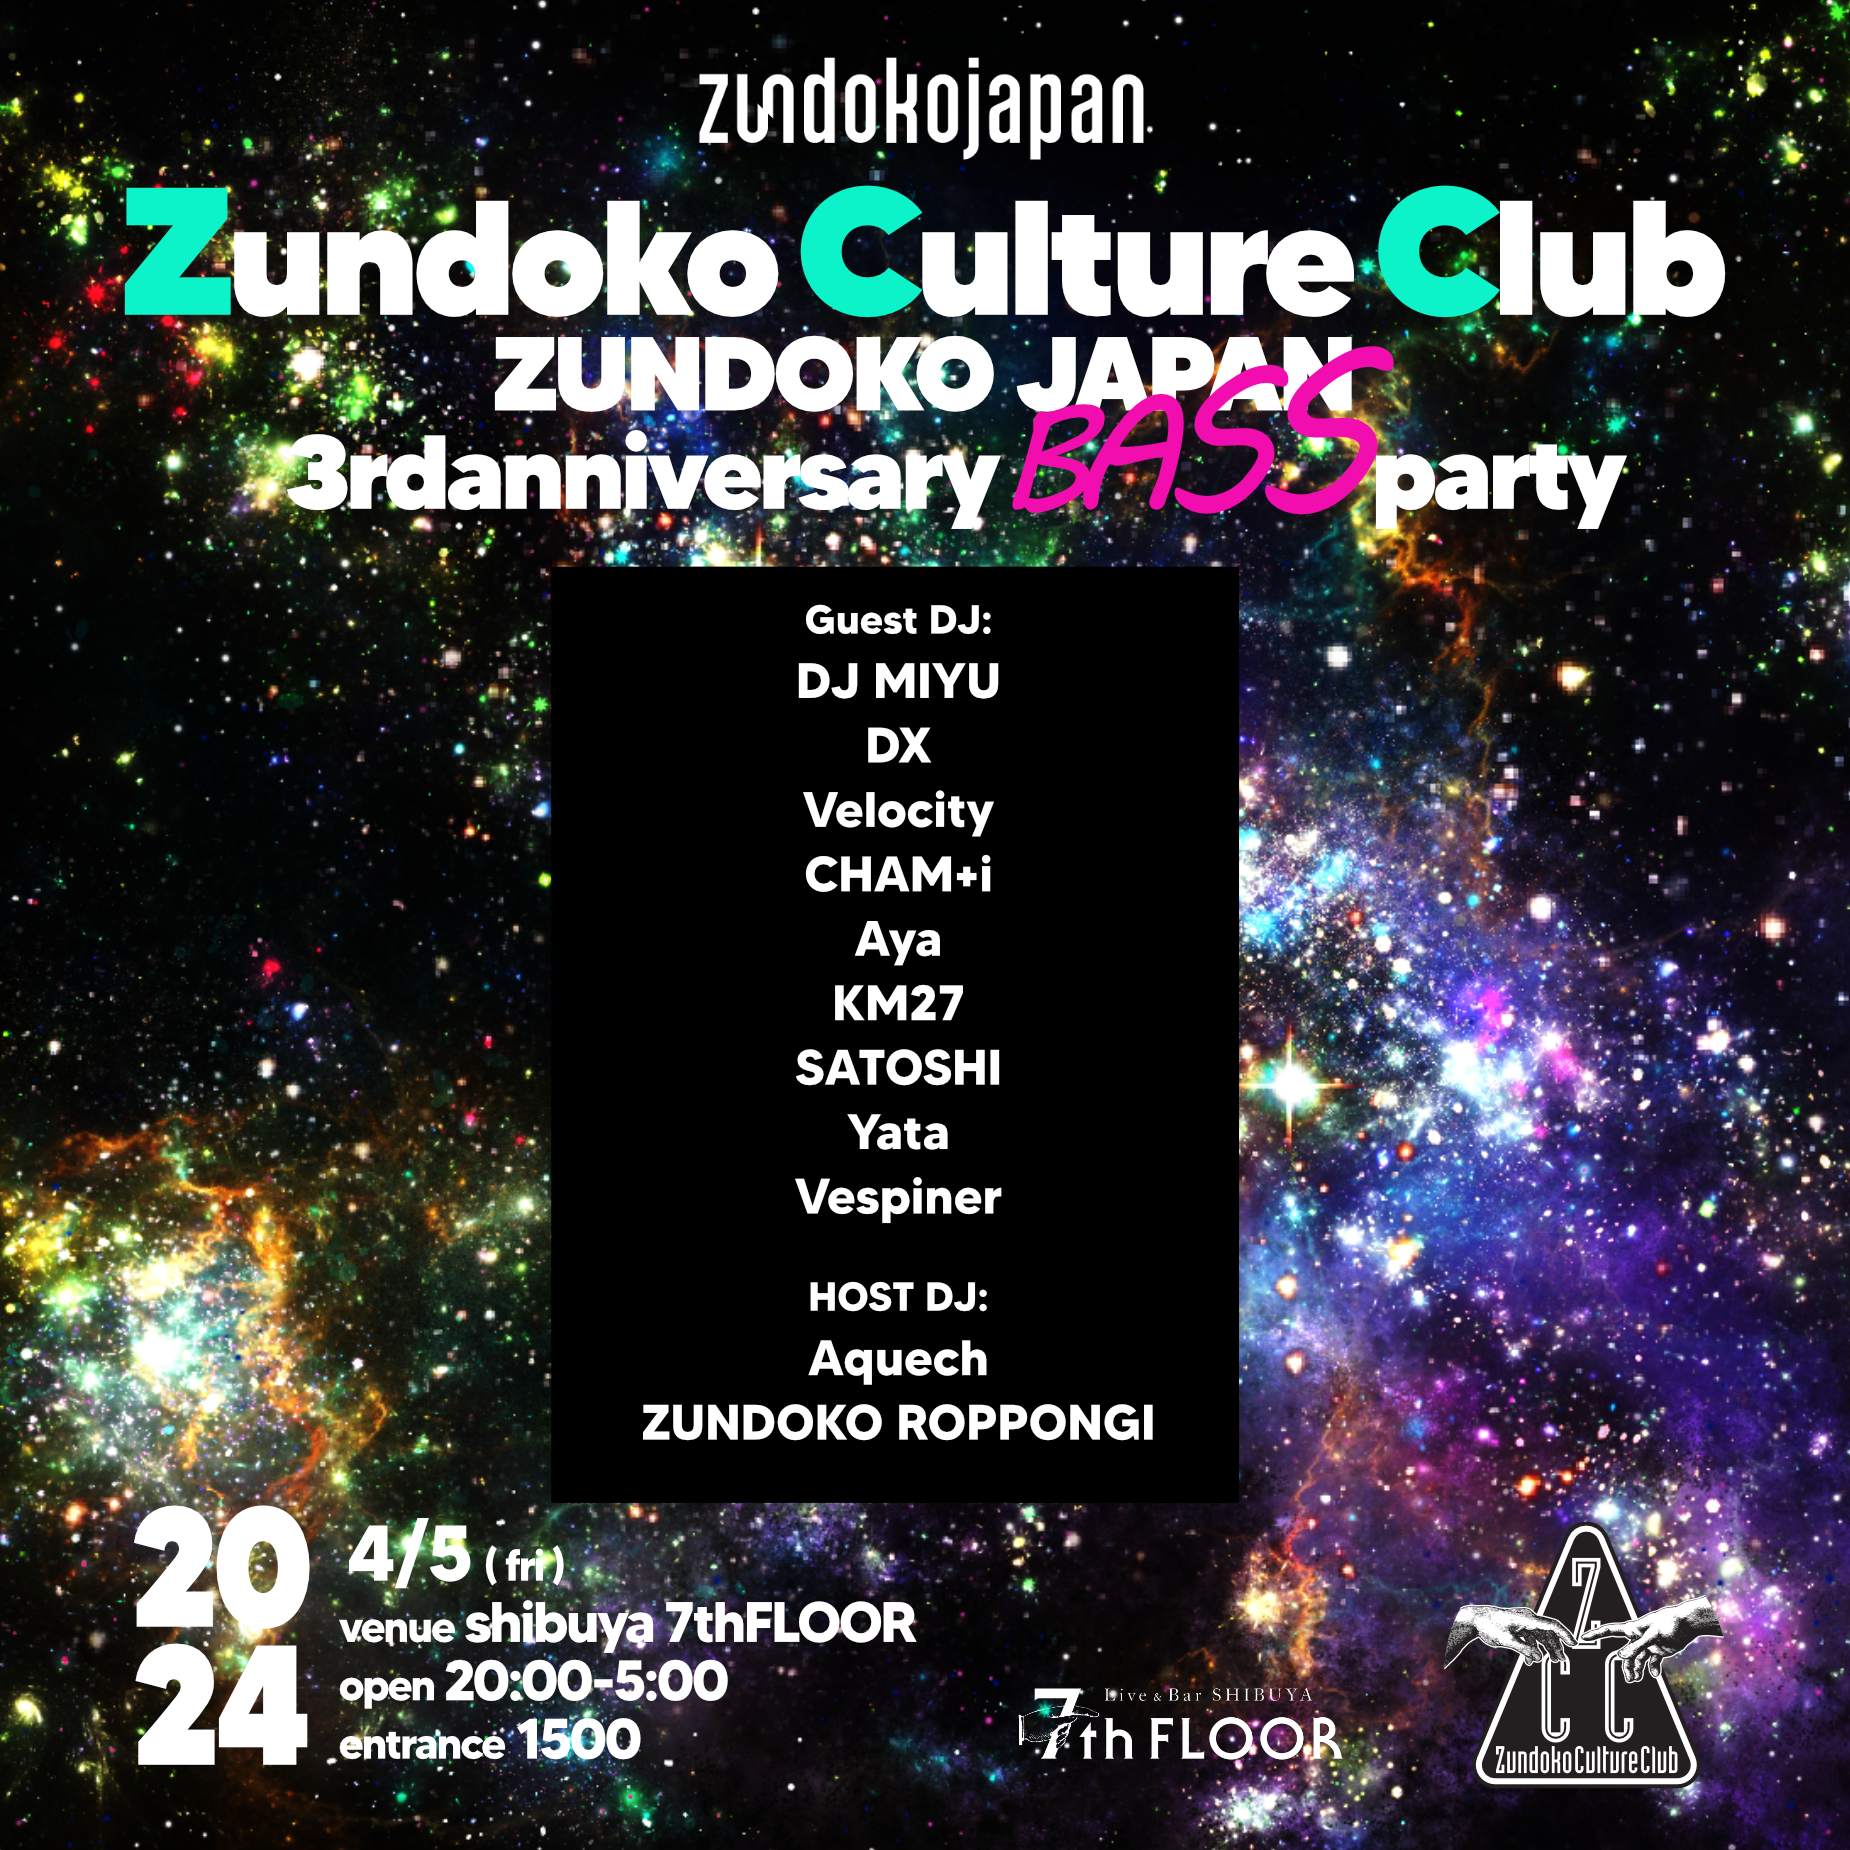 Zundoko Culture Club -ZUNDOKO JAPAN 3rdanniversary BASS party- - フライヤー表